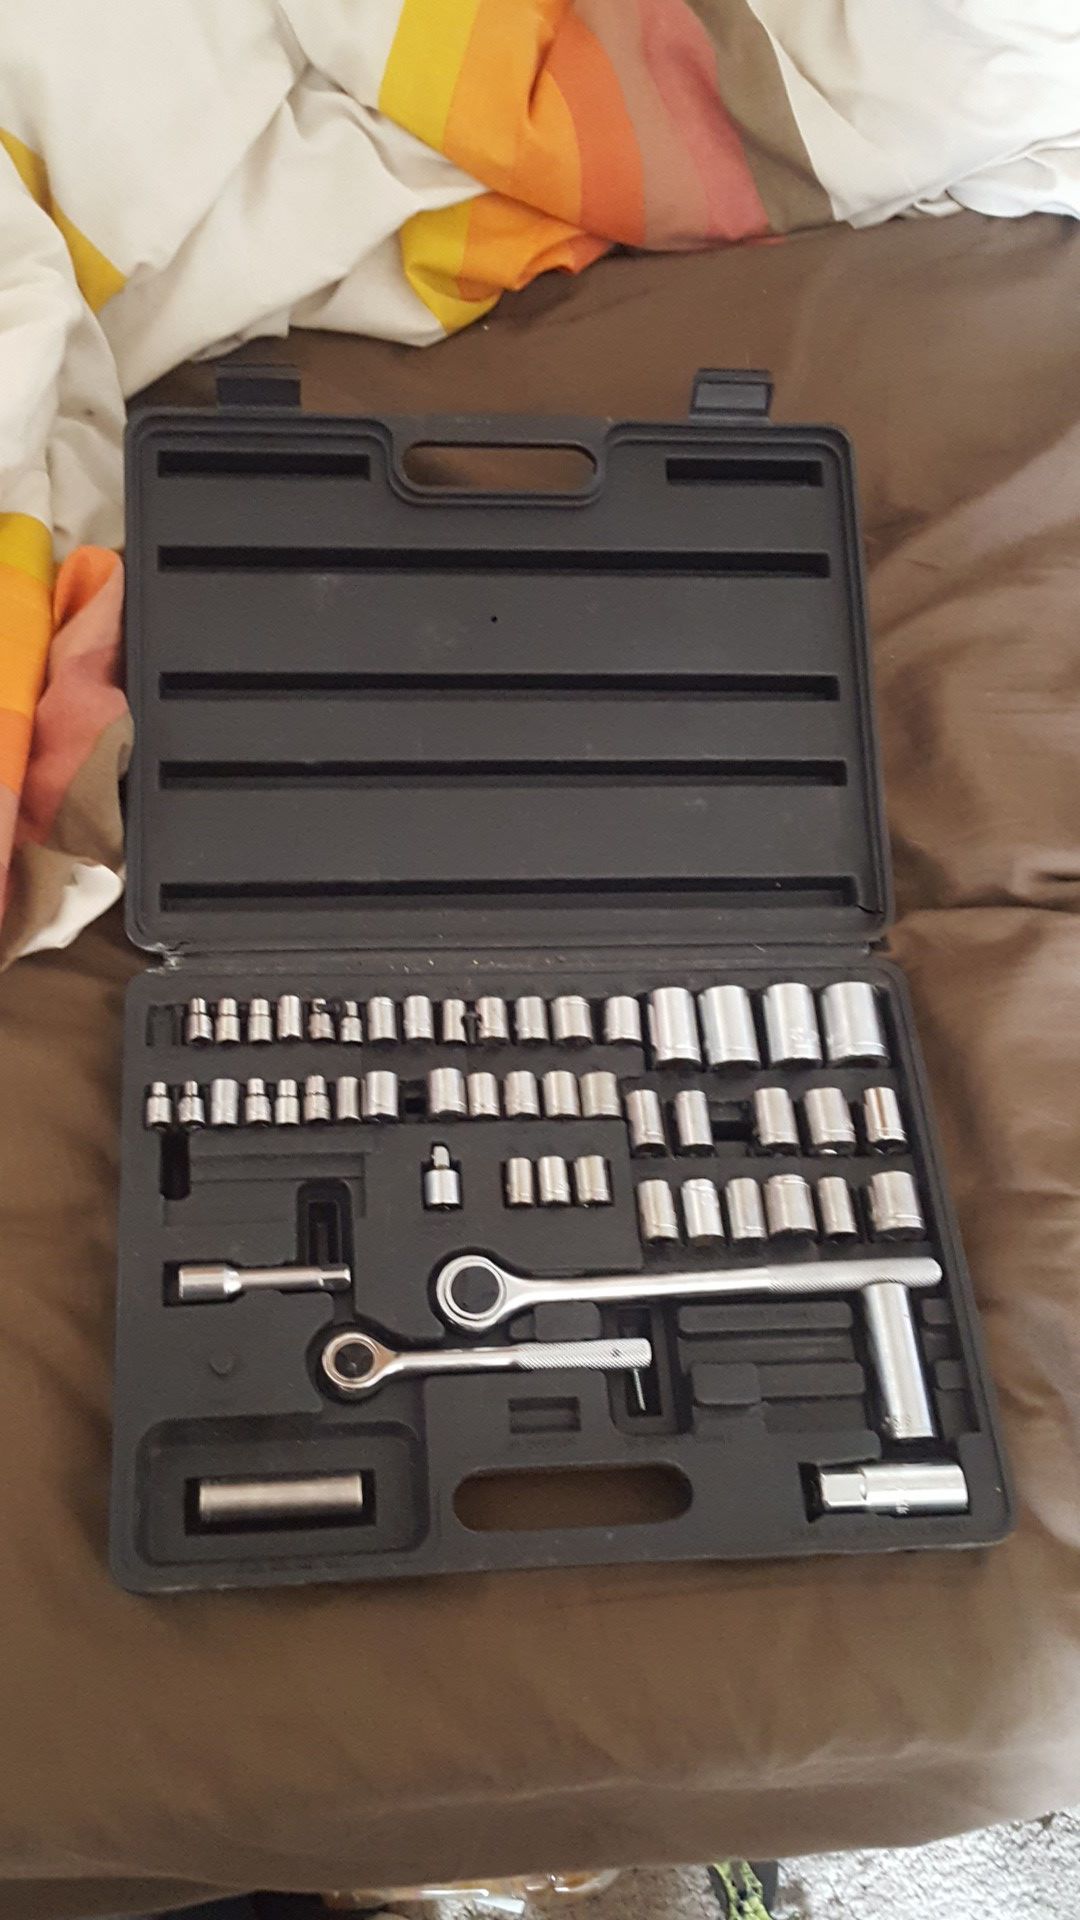 Ratchet and socket tool box